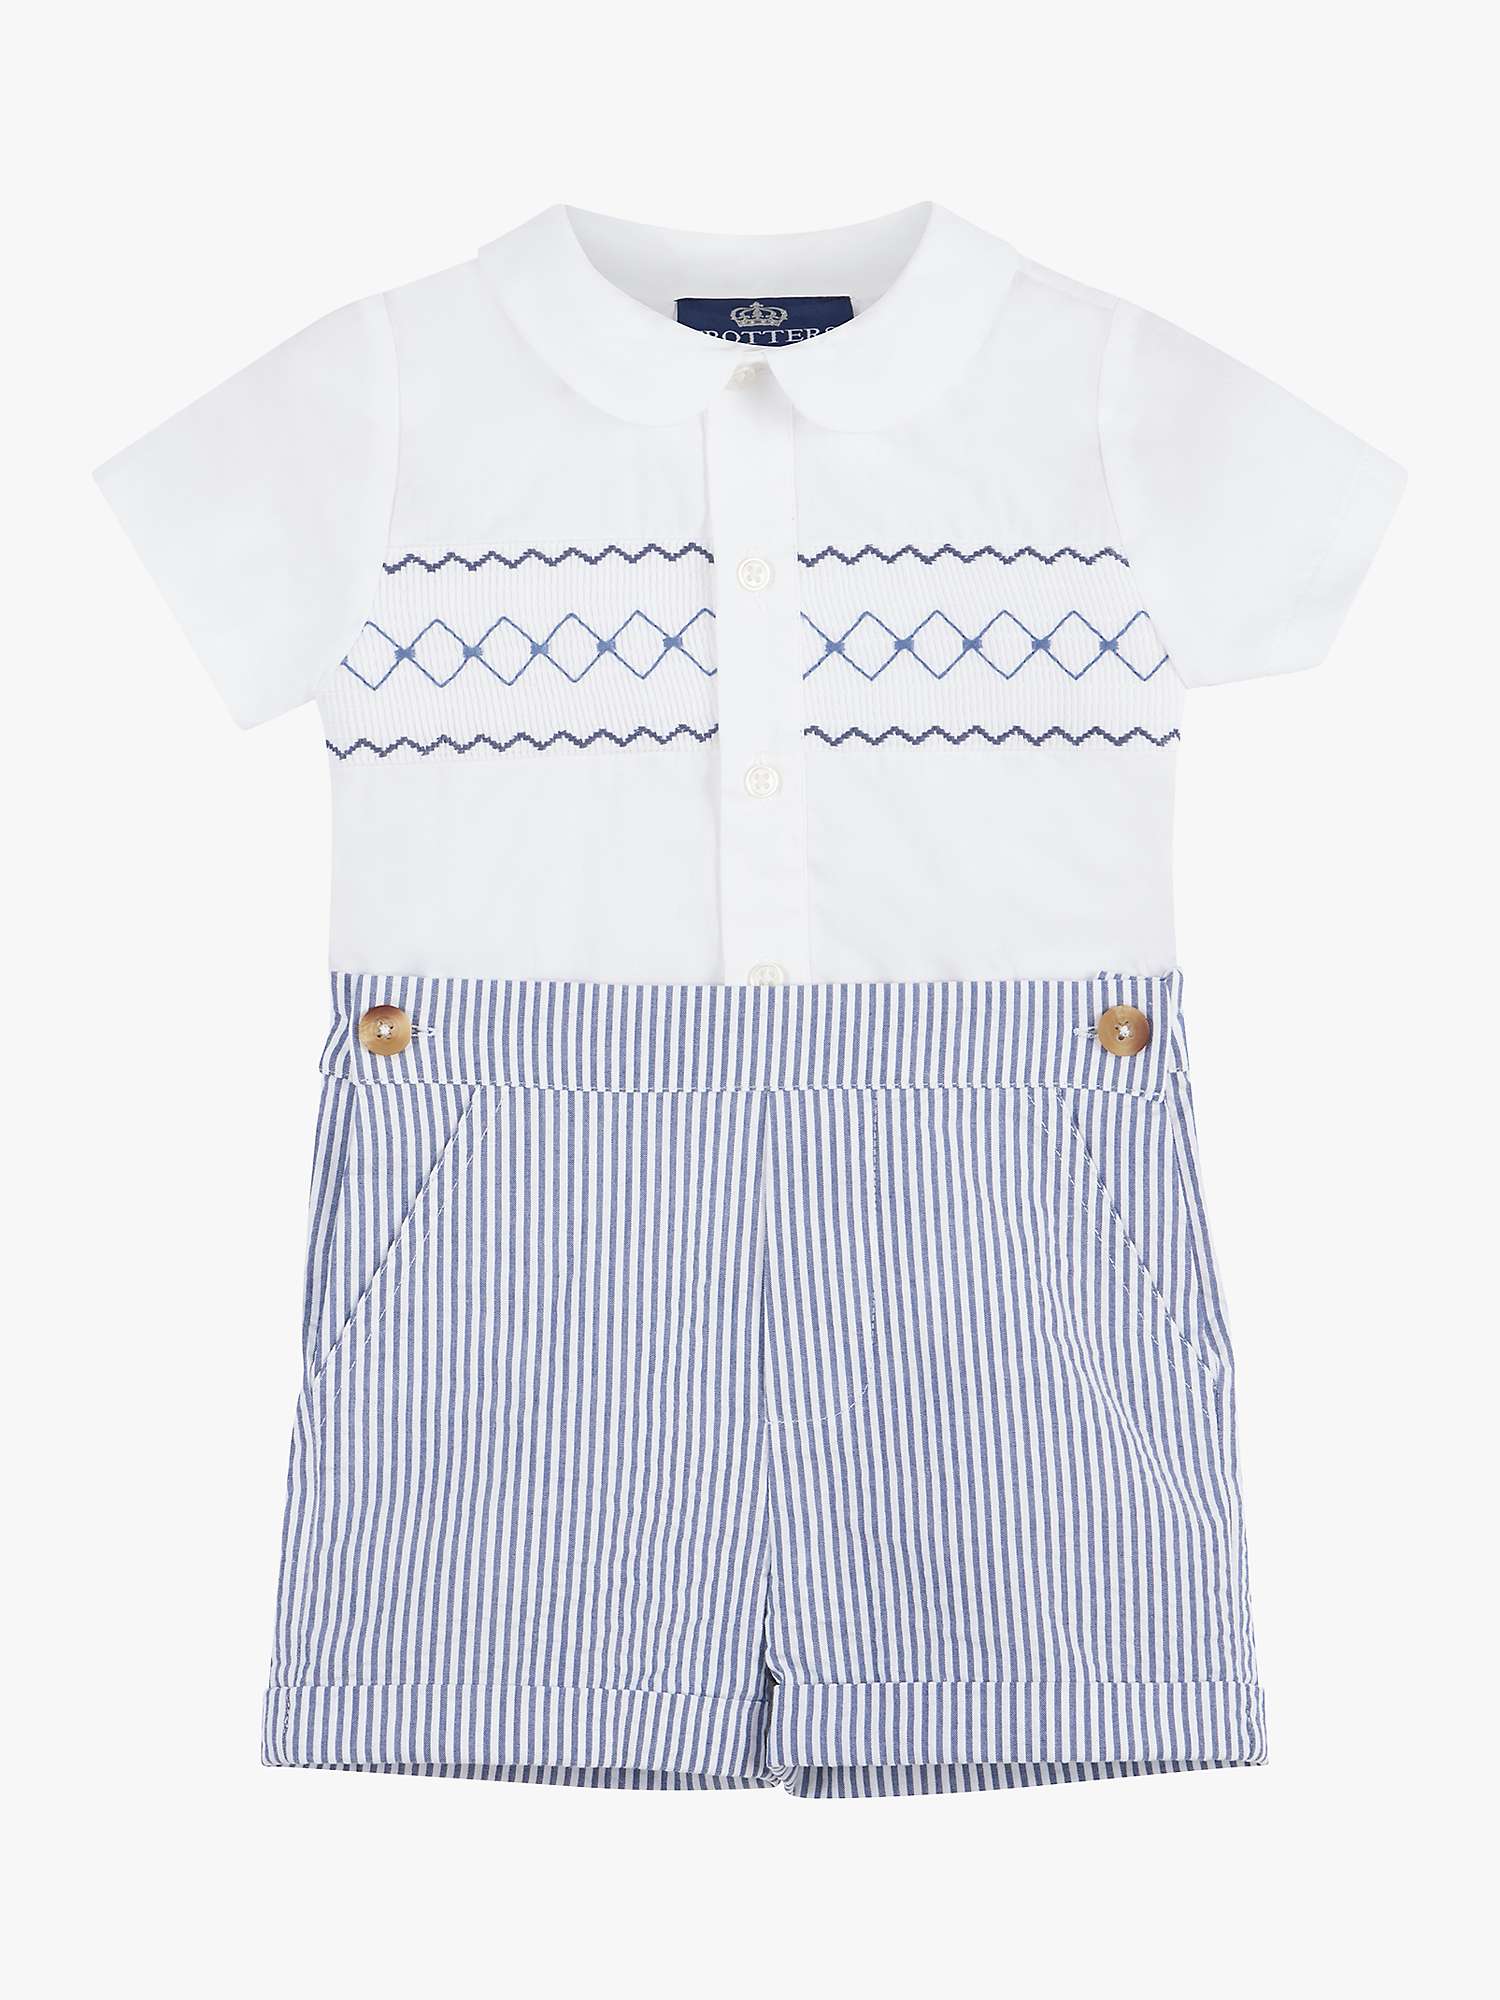 Buy Trotters Baby Rupert Smocked Short Sleeve Shirt & Shorts Set, White/Navy Online at johnlewis.com